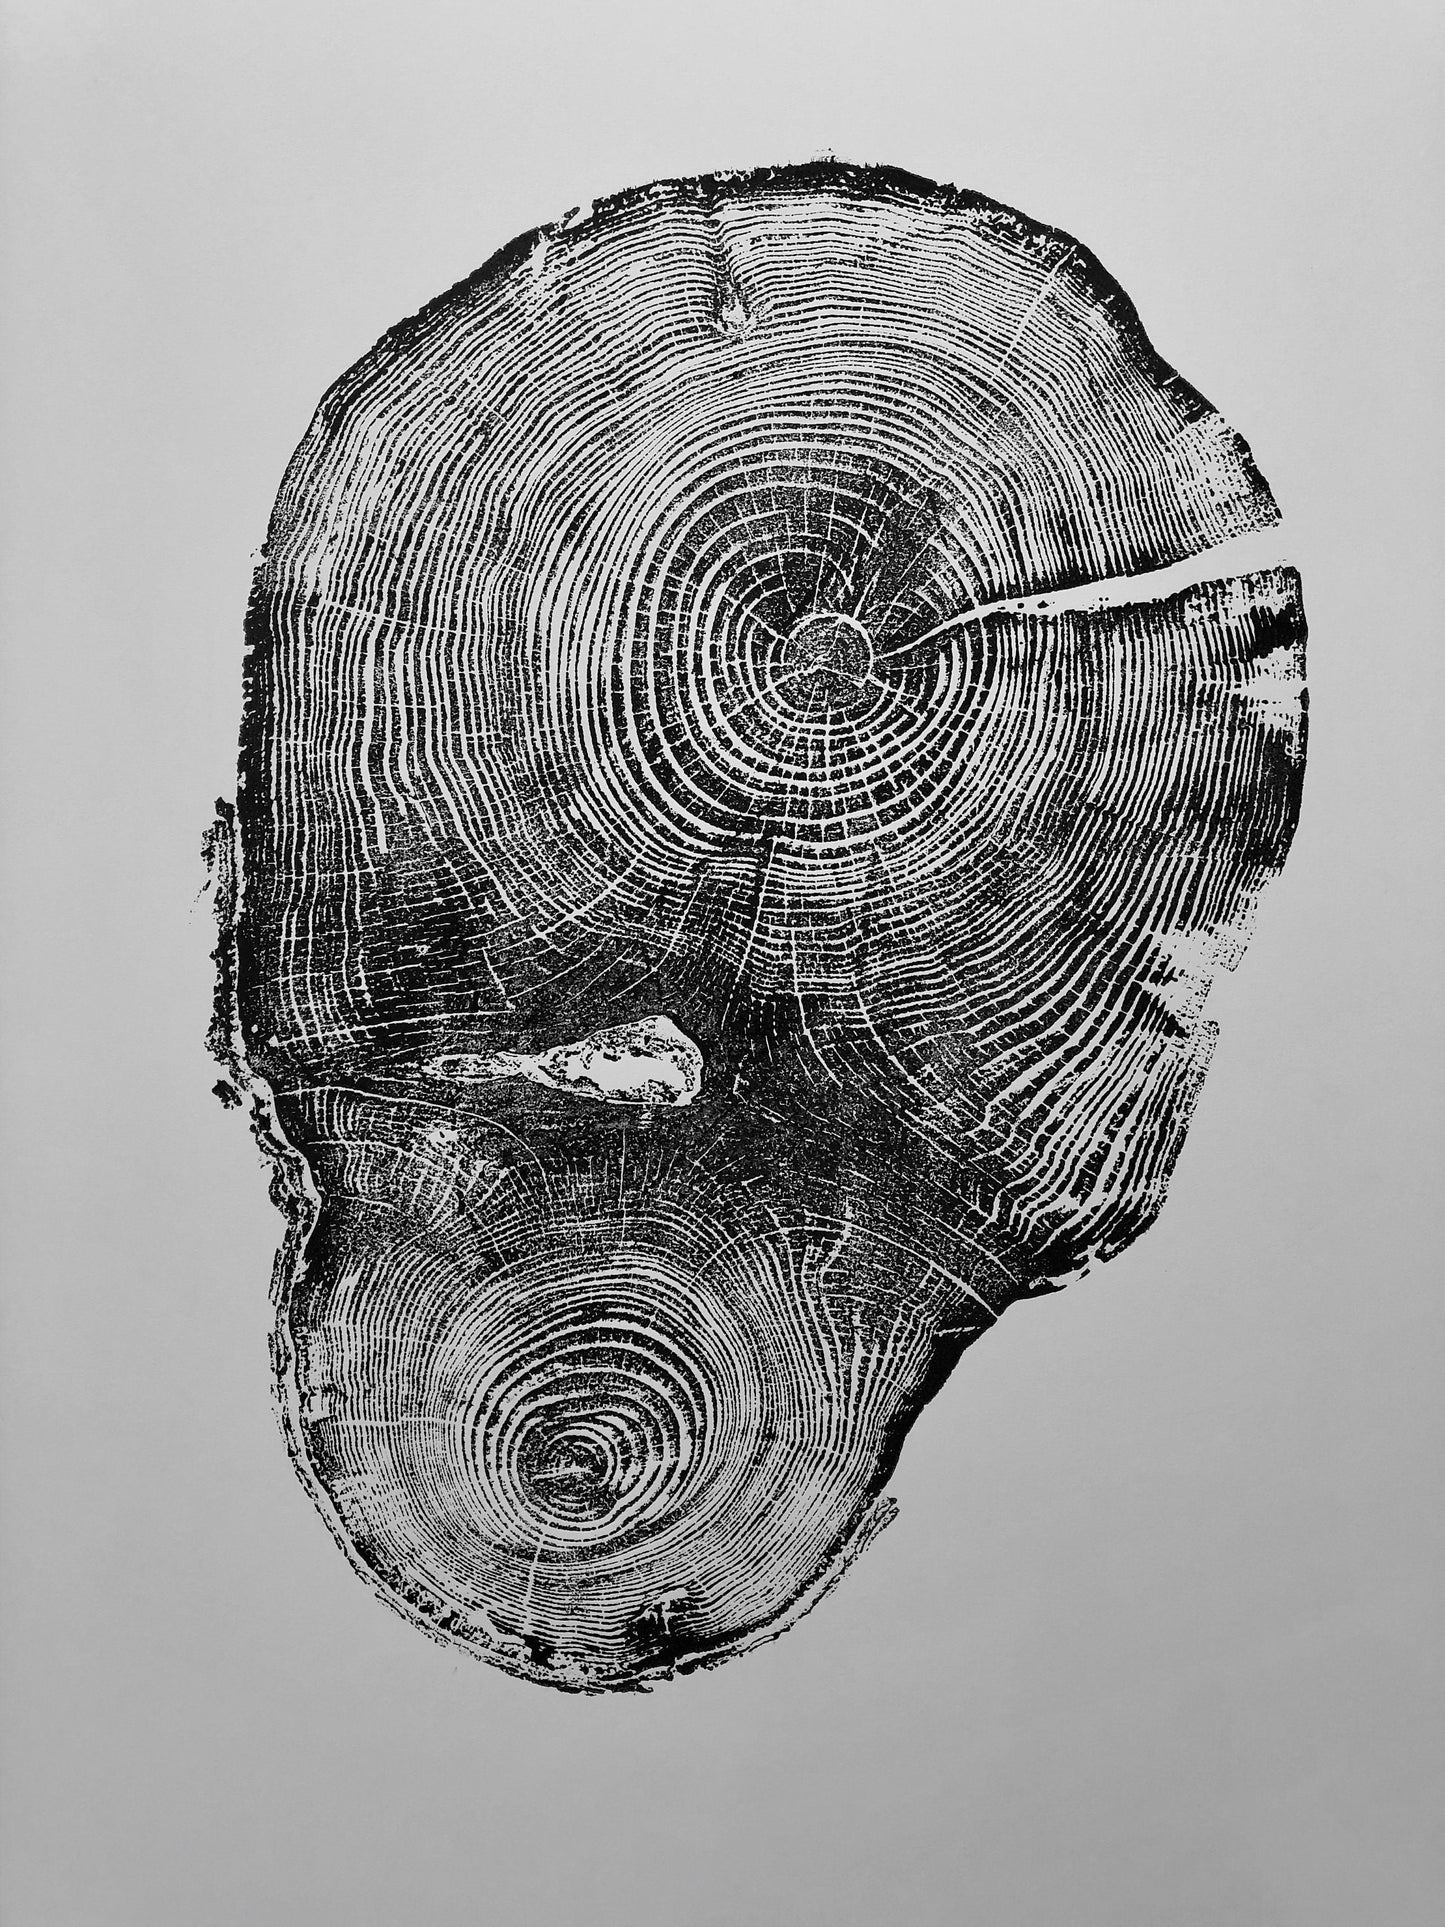 Oak, Pine, & Hemlock Set of 4 - 24x36 each print